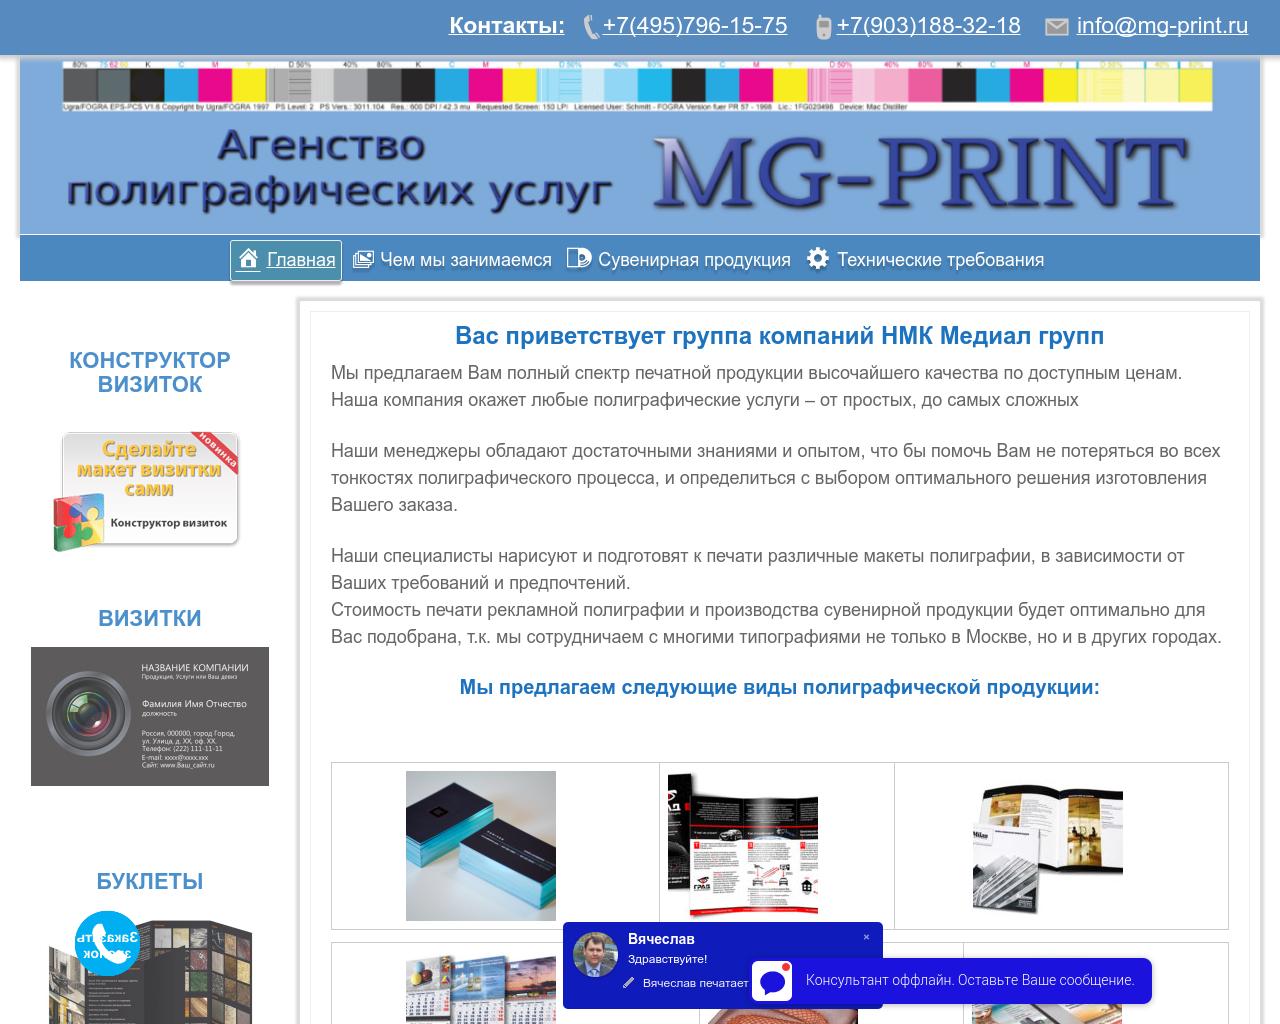 Изображение сайта mg-print.ru в разрешении 1280x1024